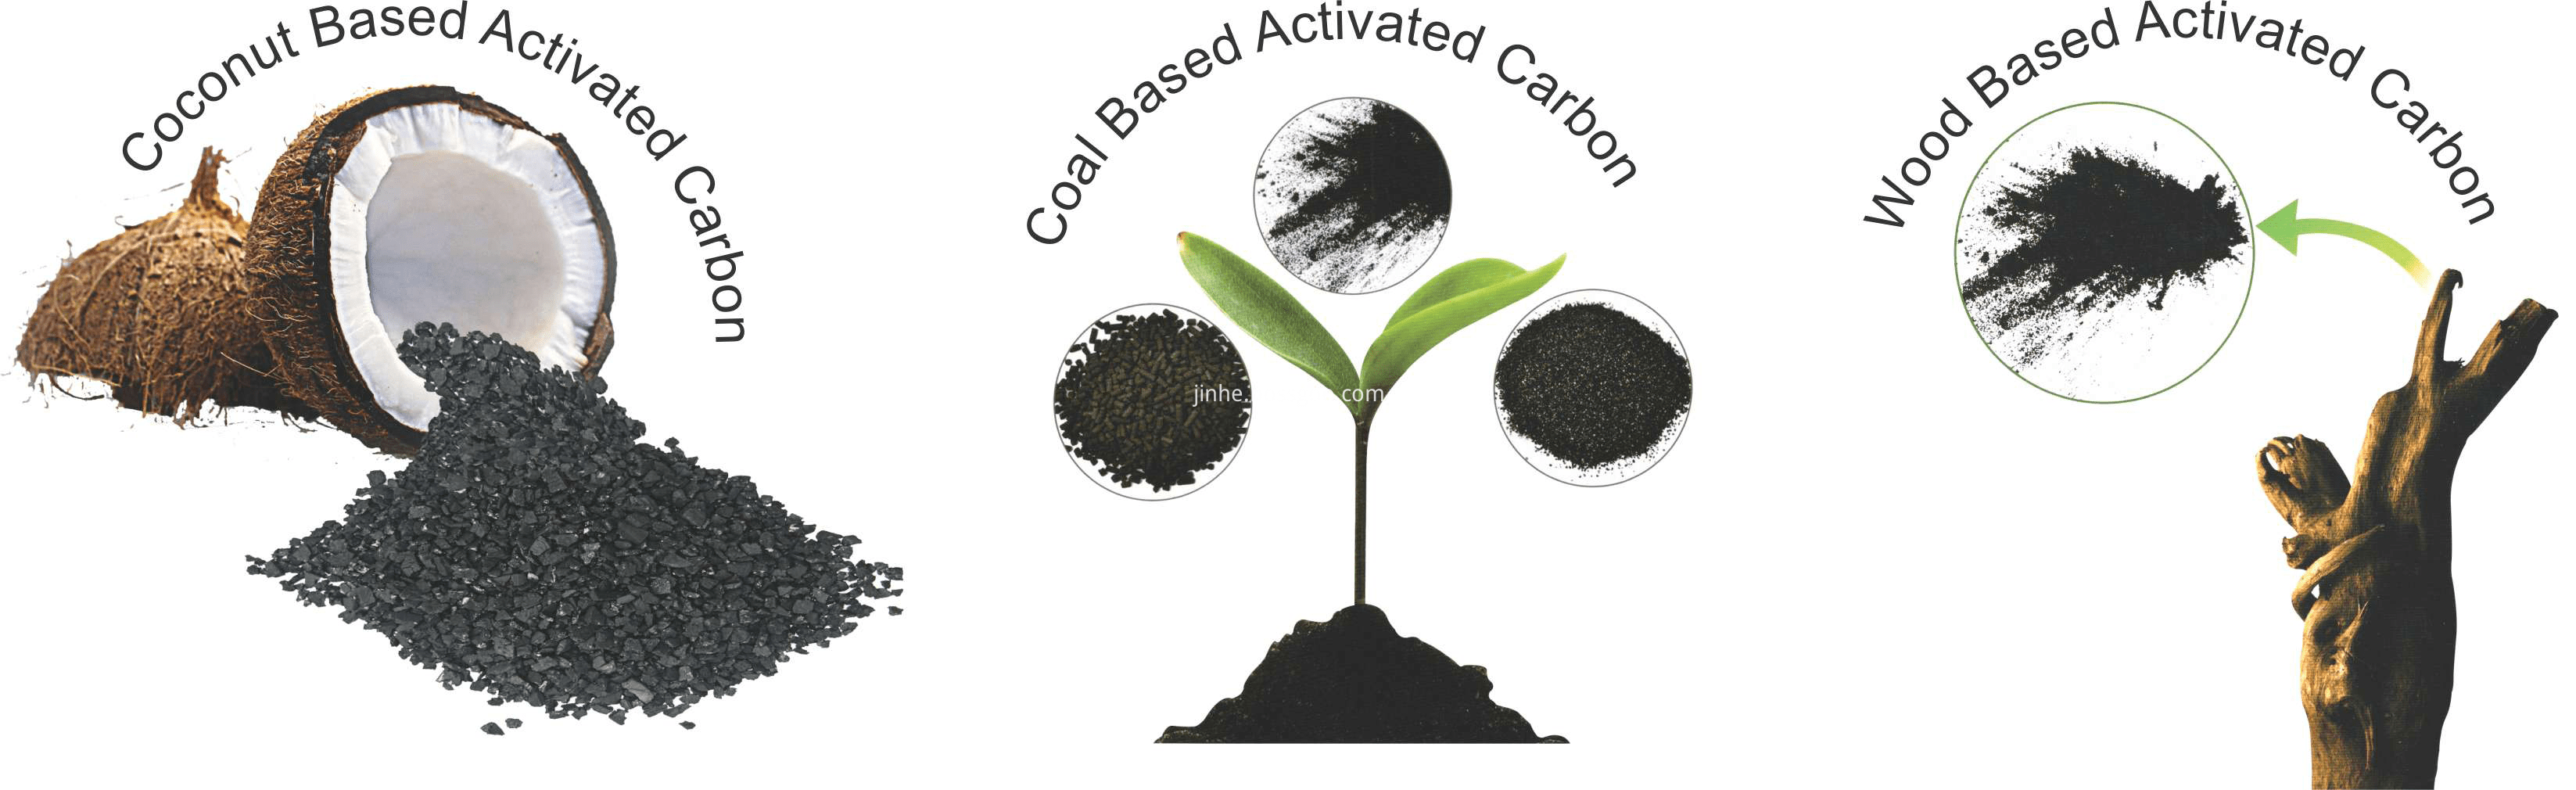 Activated Carbon Remove Non-Edible Oil Refineries